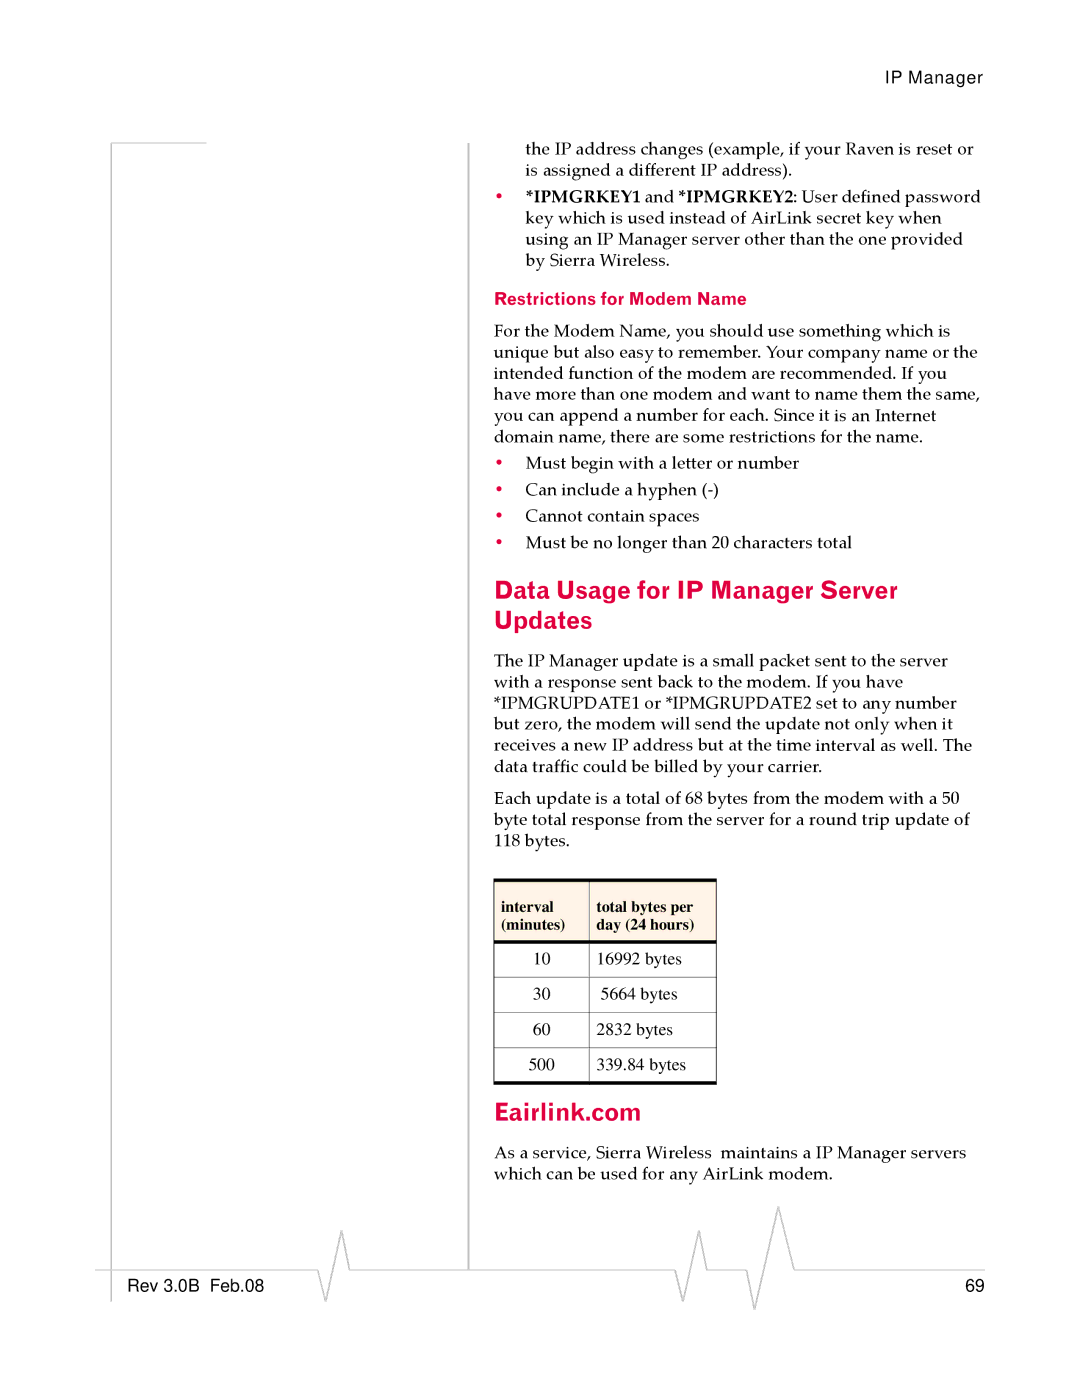 Sierra Wireless 20070914 manual Data Usage for IP Manager Server Updates, Eairlink.com, Restrictions for Modem Name 